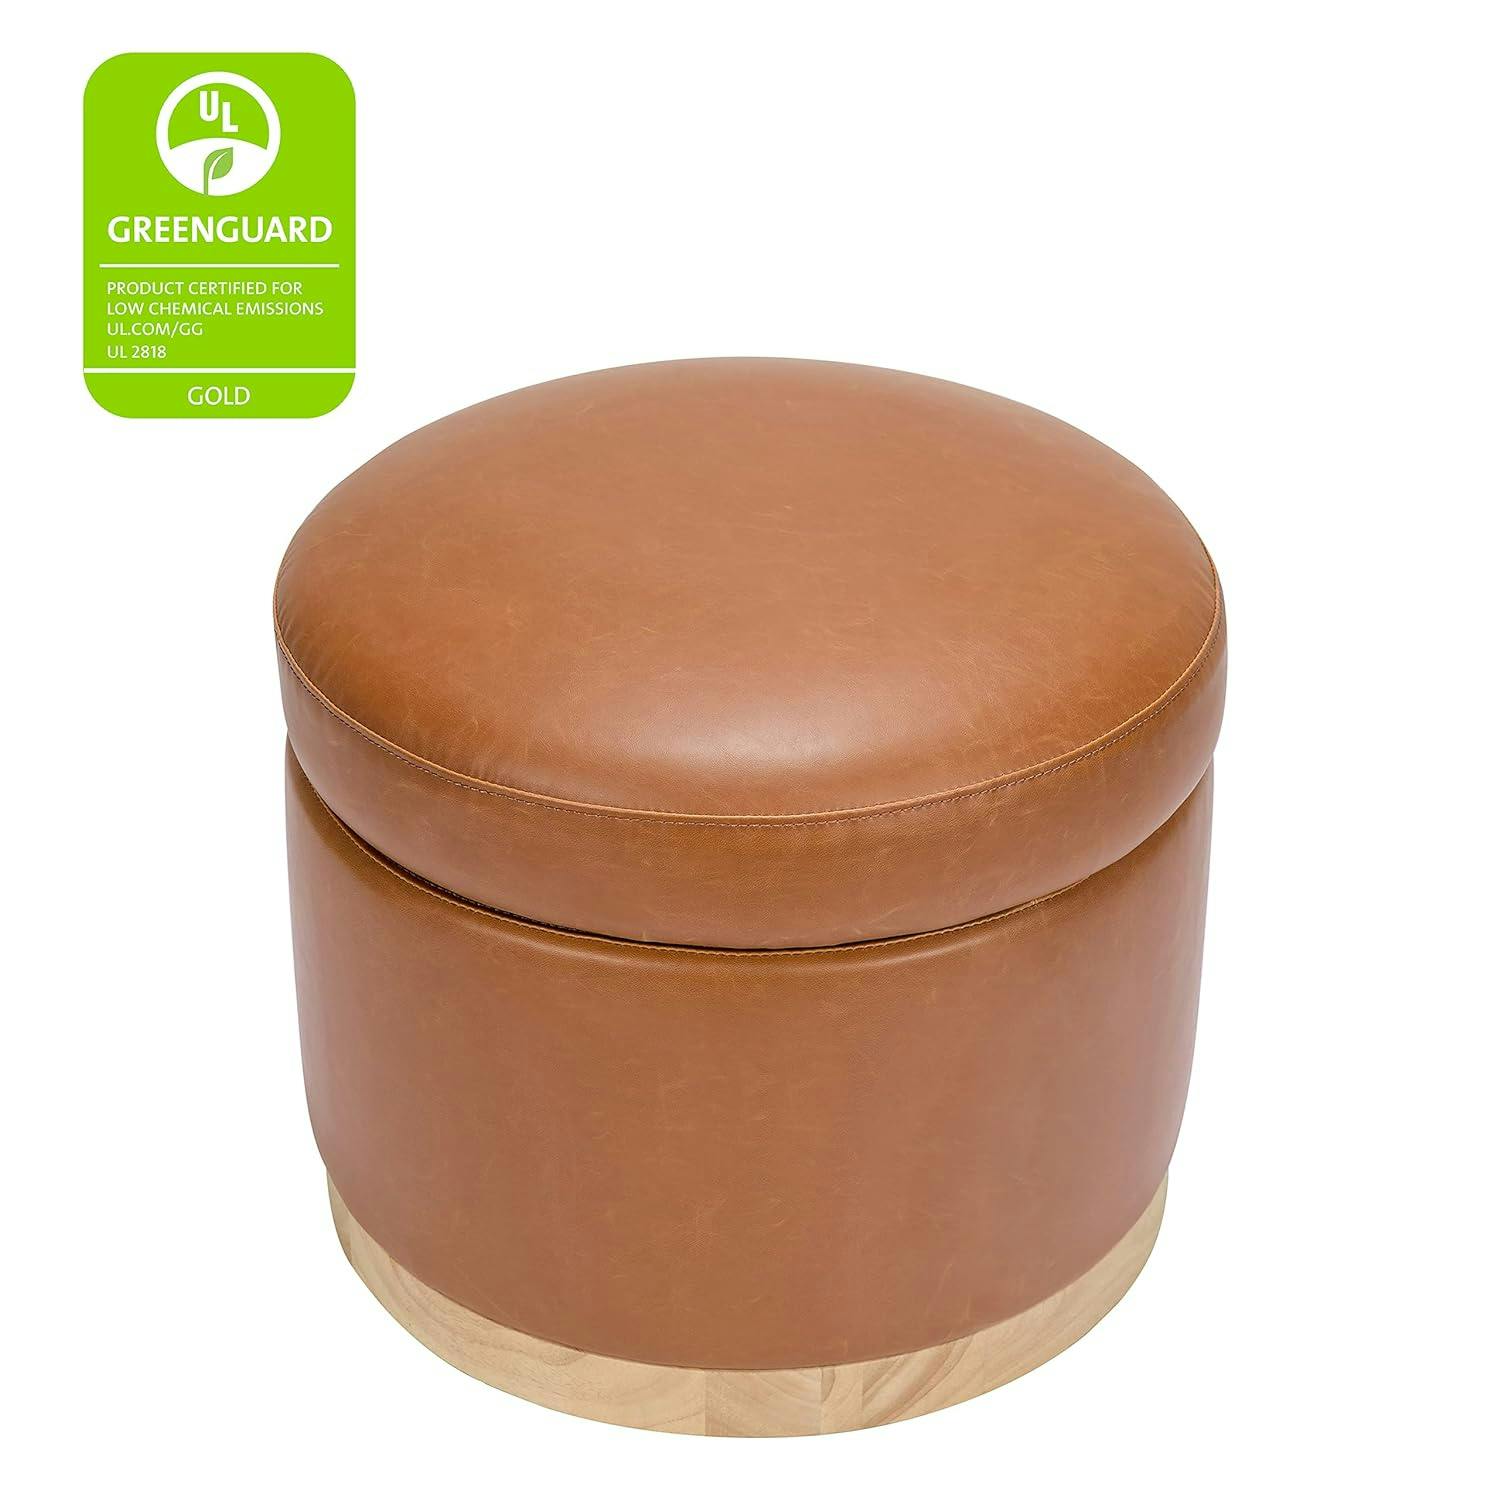 Naka 21.75'' Vegan Tan Leather Storage Ottoman with Light Wood Base